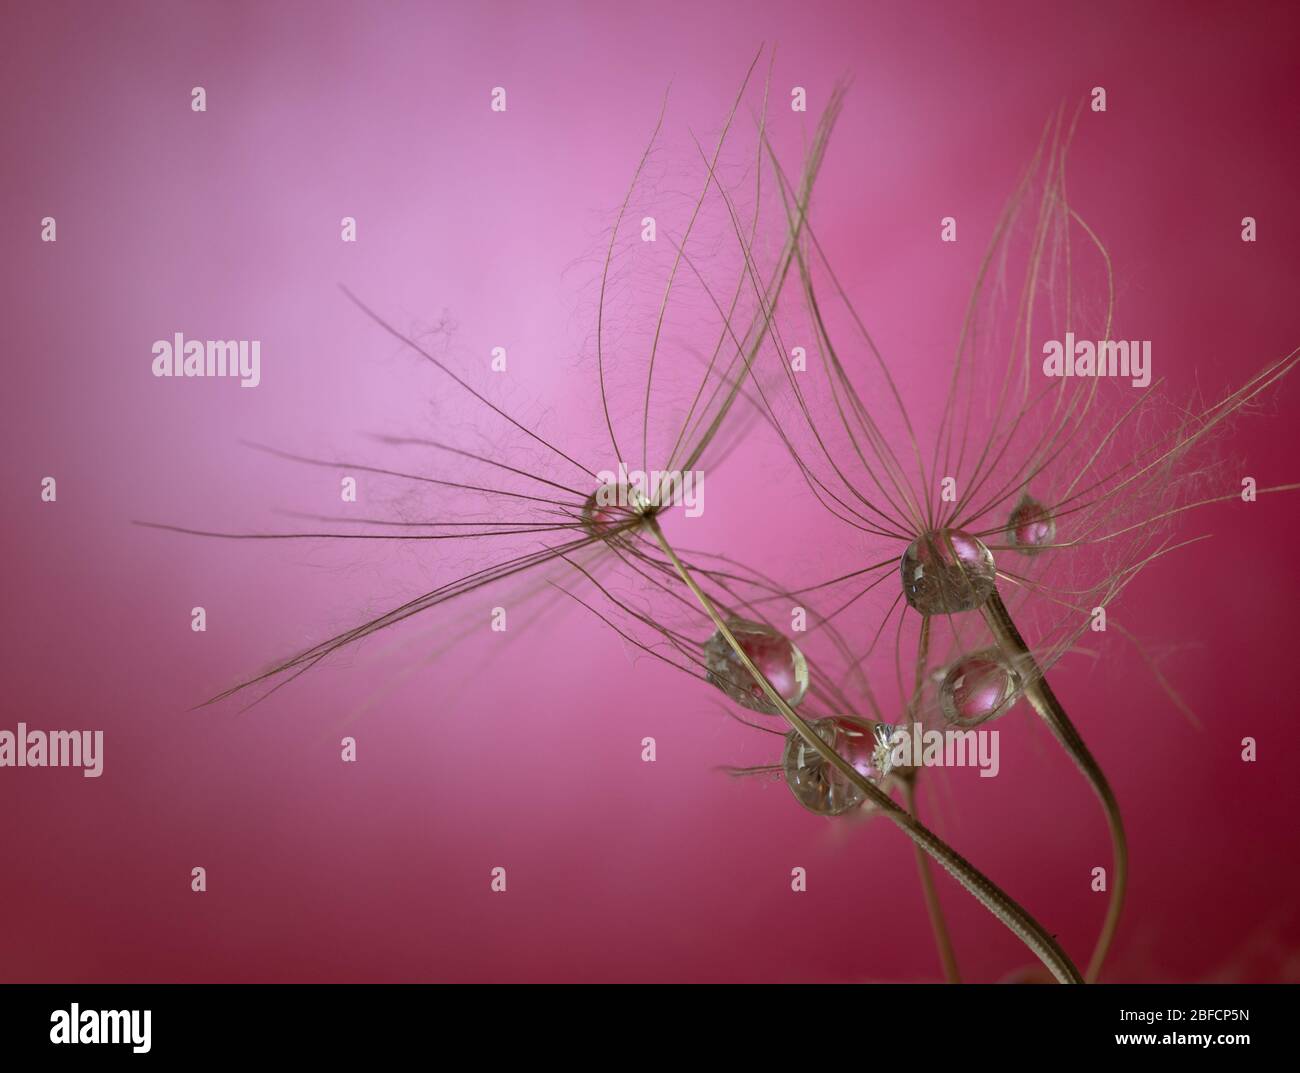 Dandelion, taraxacum, seeds with raindrops against a bright magenta background in a studio. Macro, Selective focus. Stock Photo